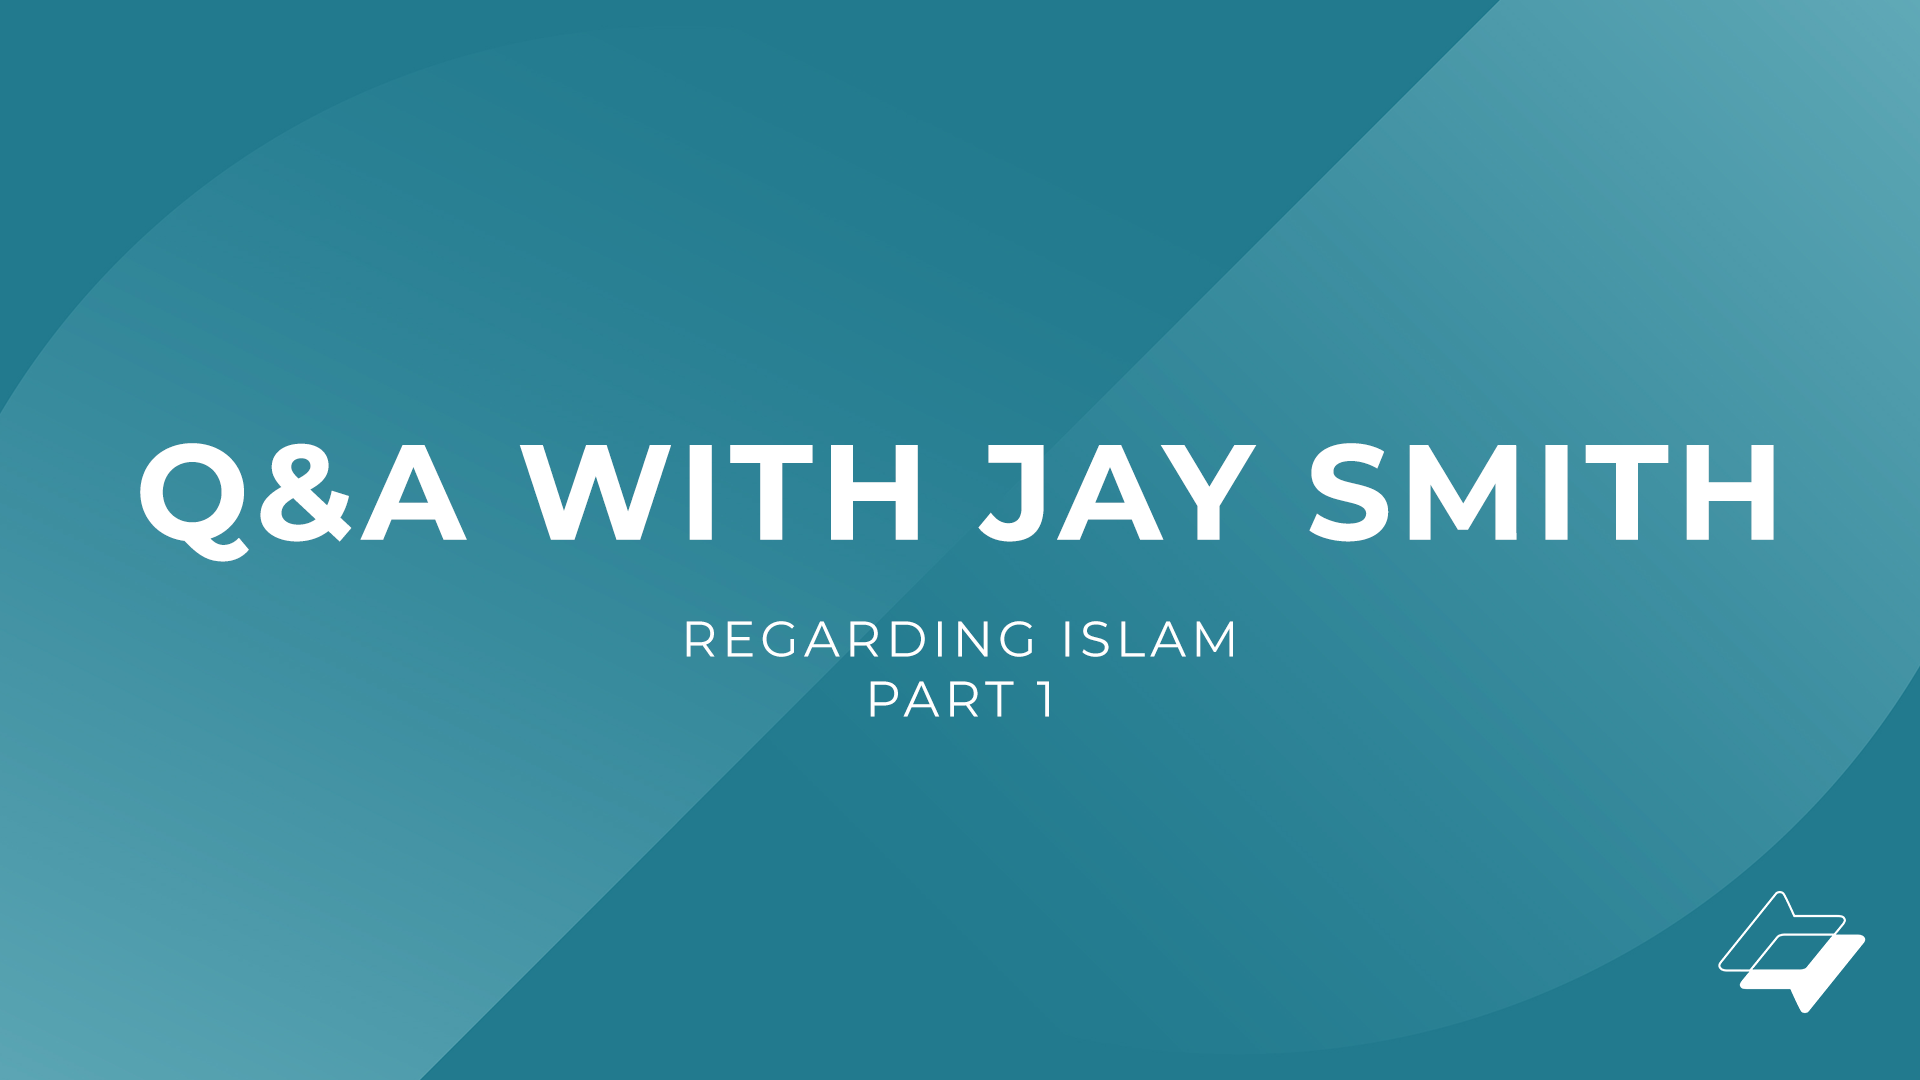 Q&A with Jay Smith Regarding Islam – Part 1